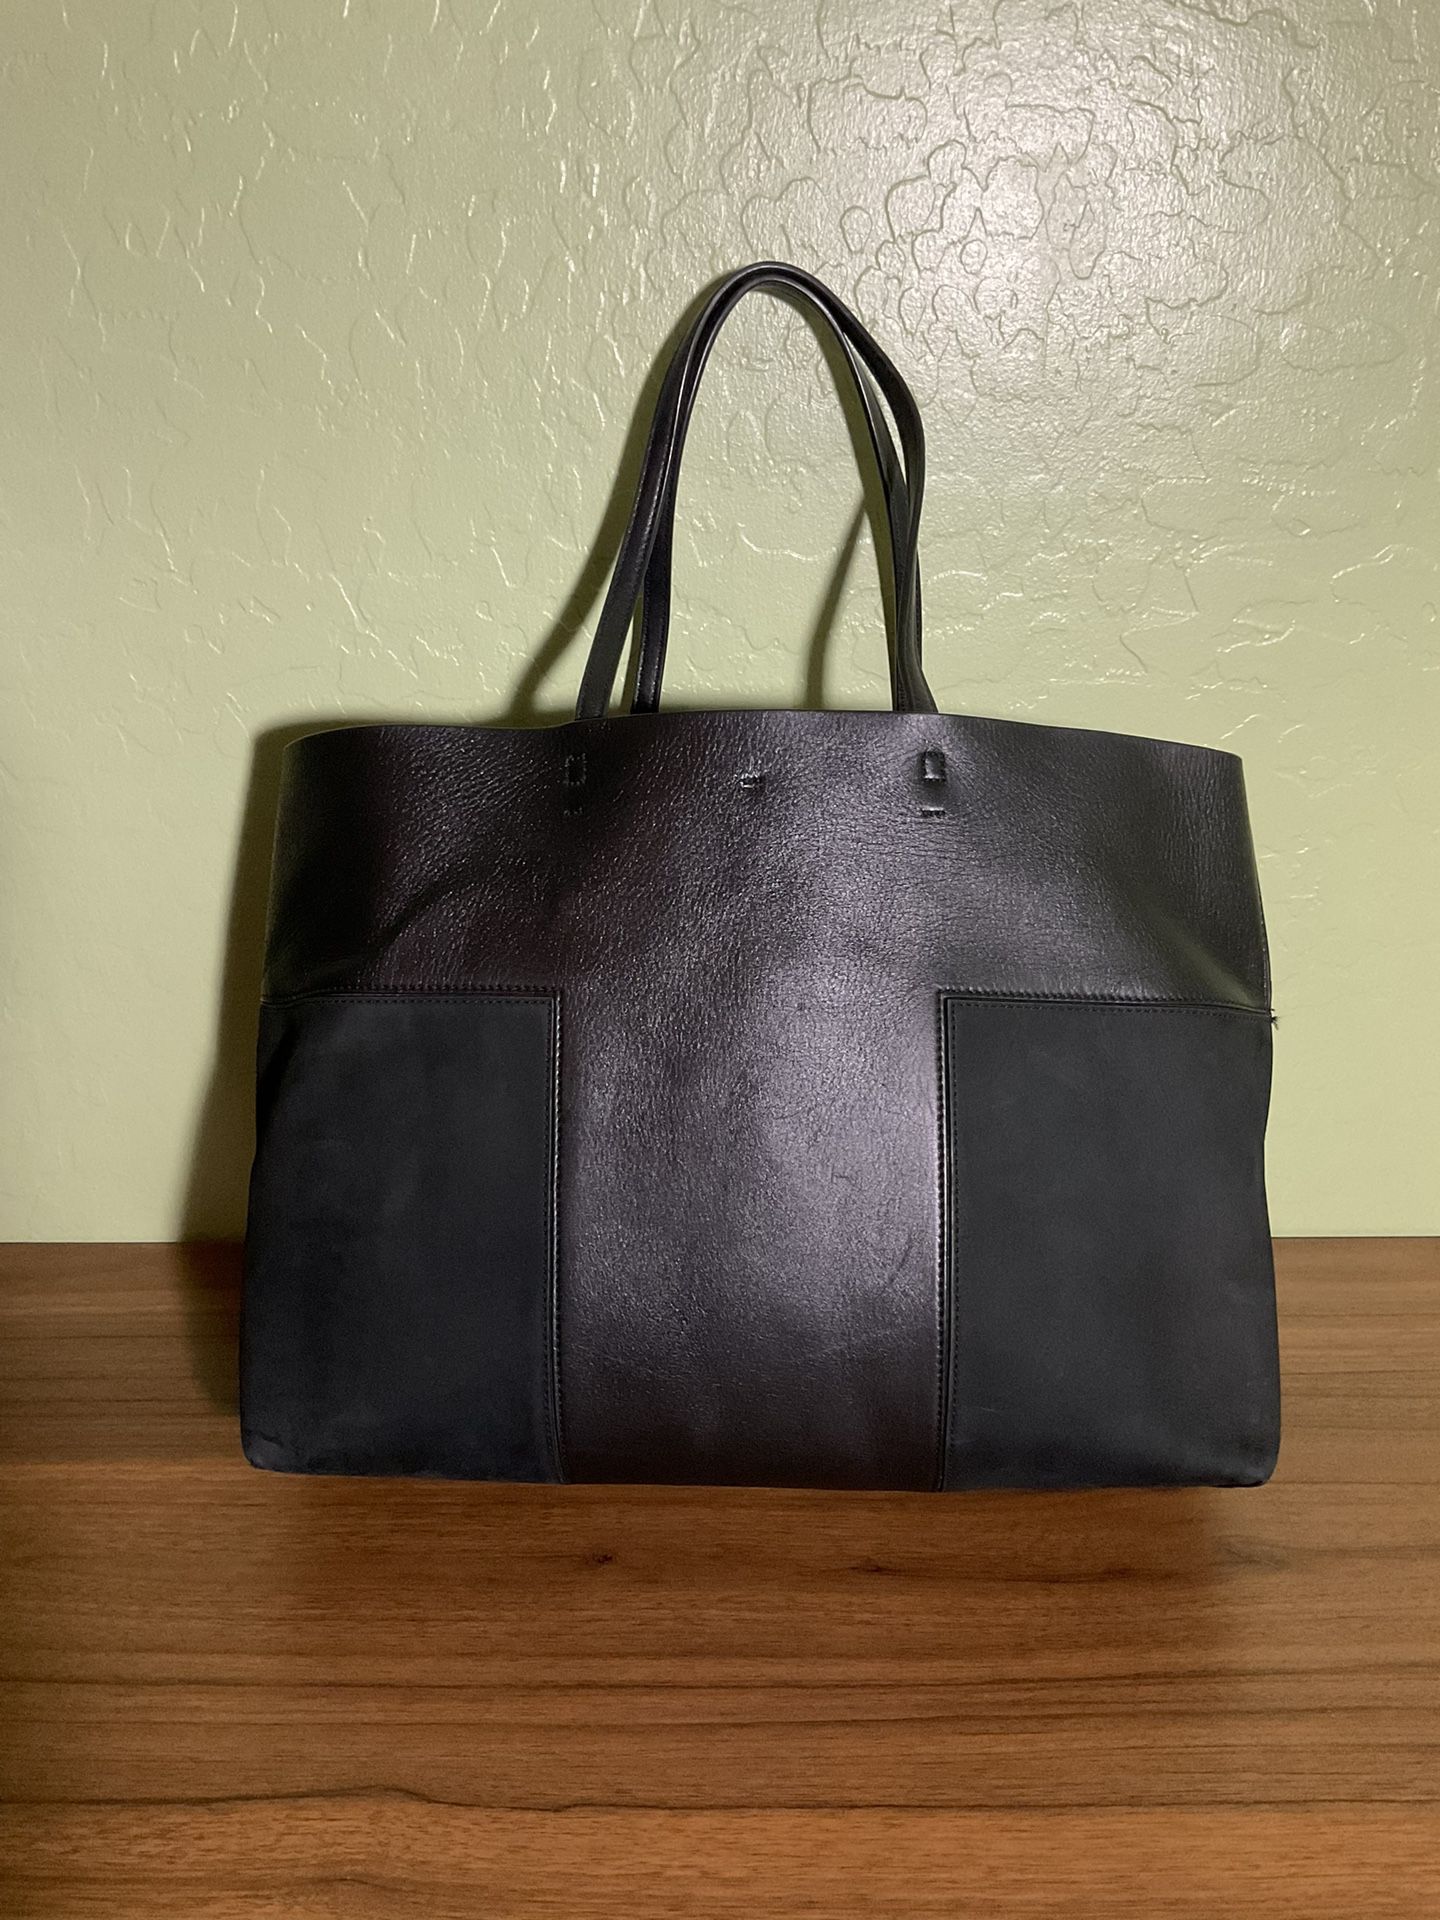 Tory Burch Block-T Leather Tote Black Bag